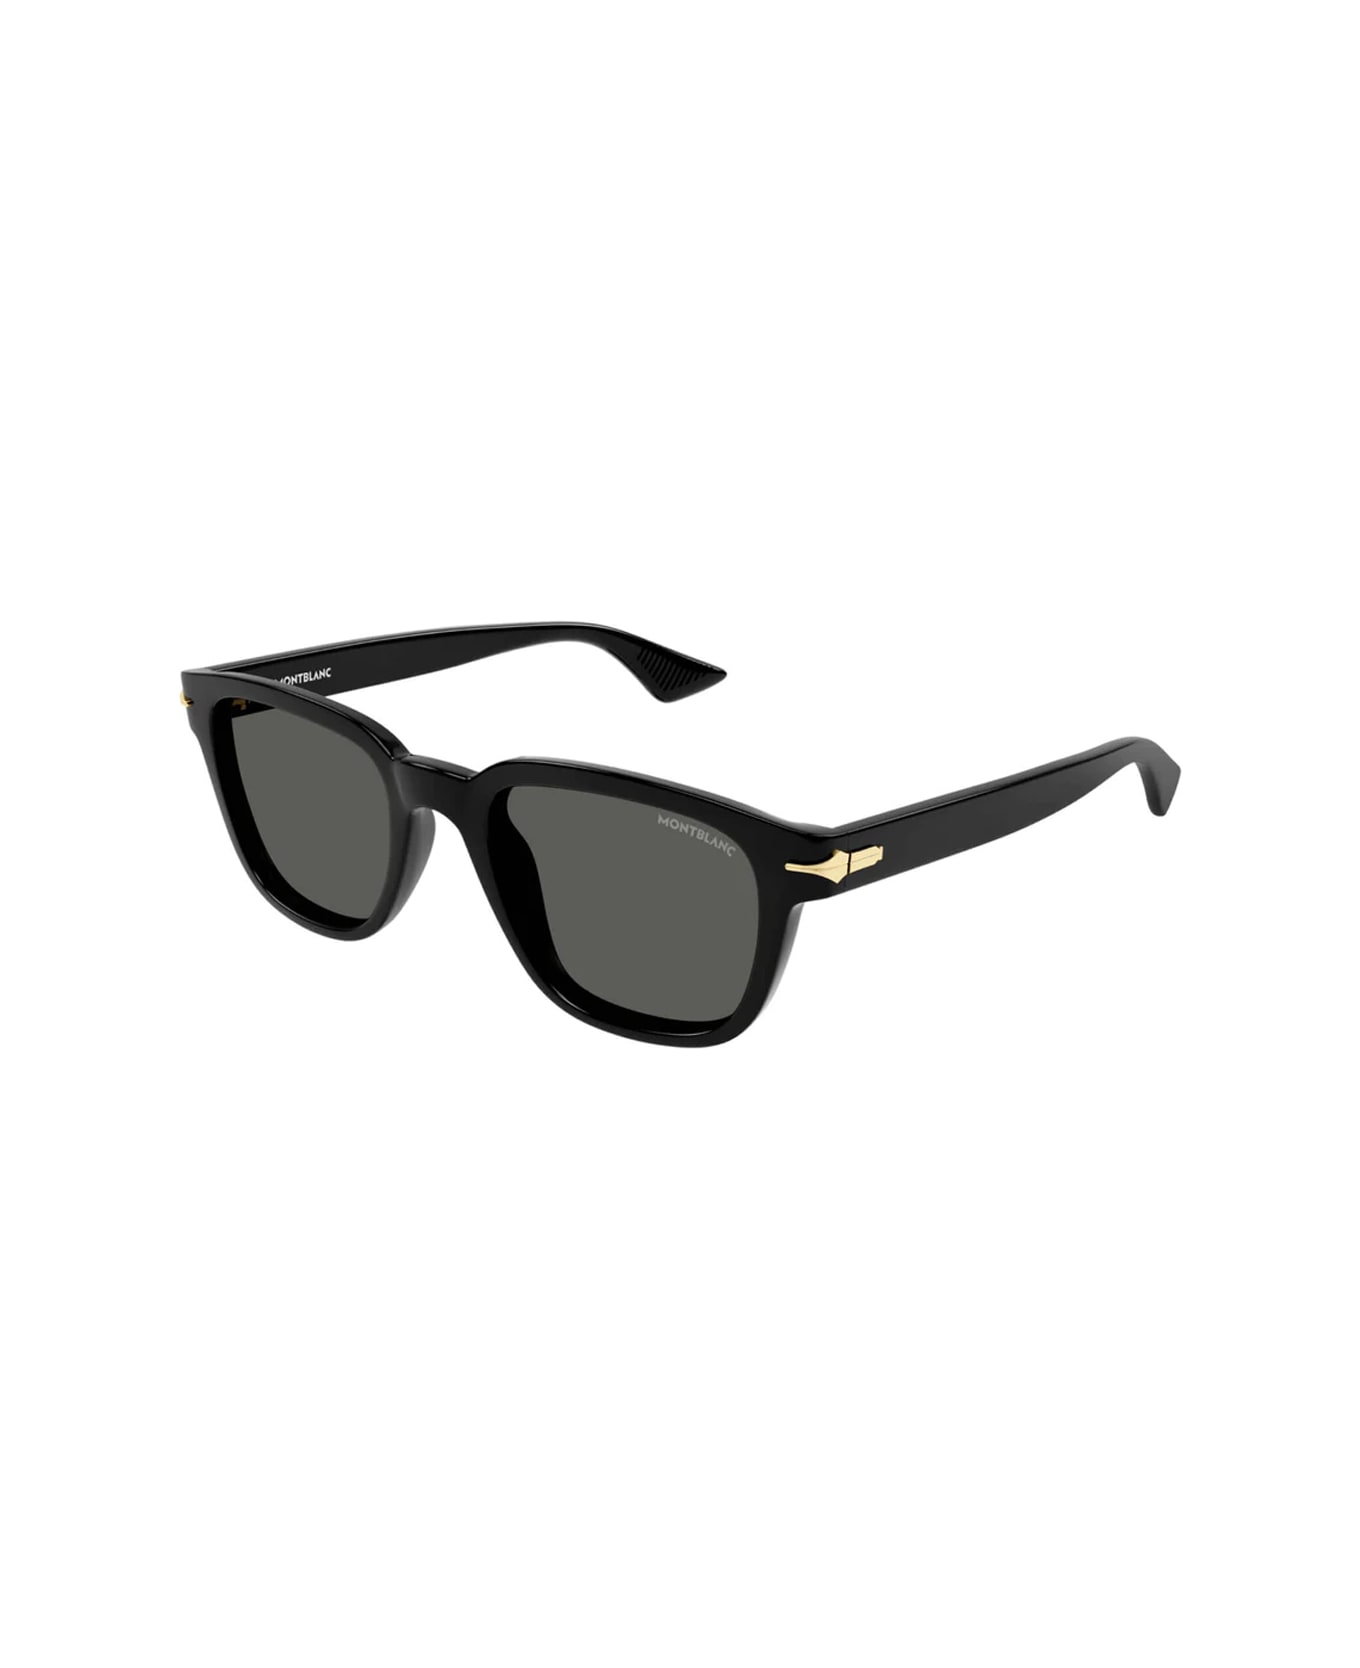 Montblanc Mb0302s 001 Sunglasses - Nero サングラス